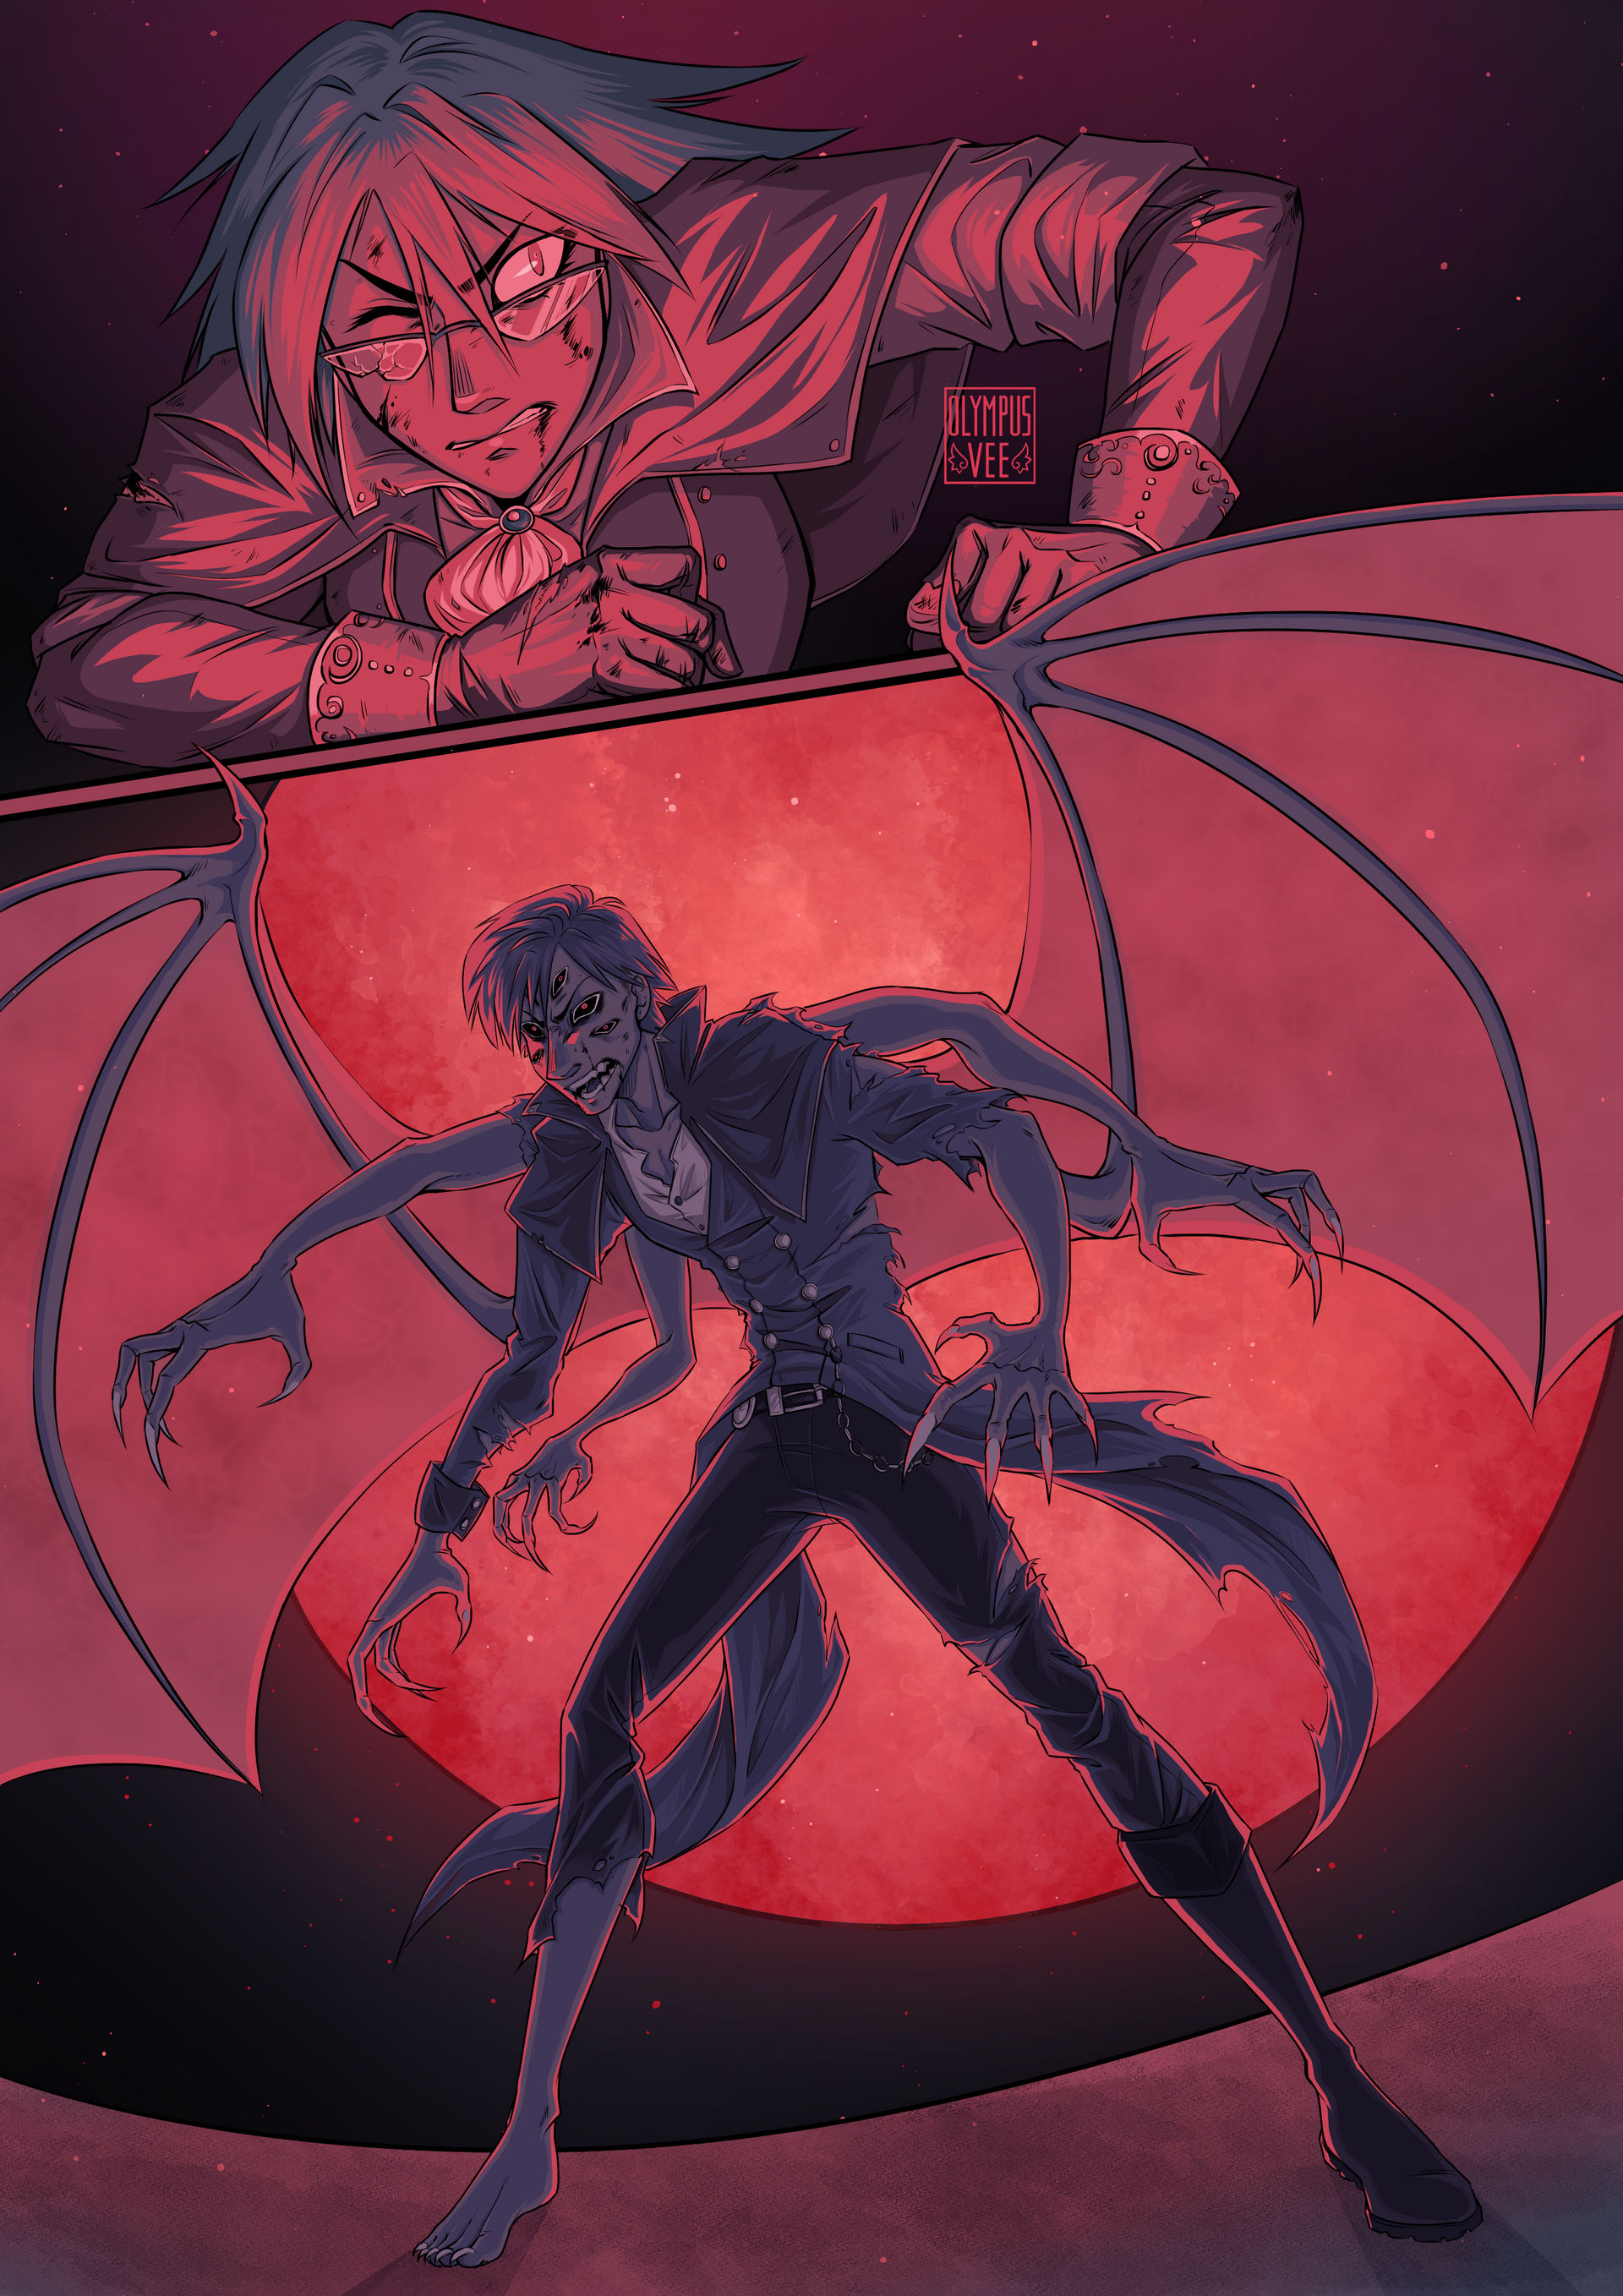 OC] A Bloodborne x NieR crossover illustration I just finished! : r/ bloodborne